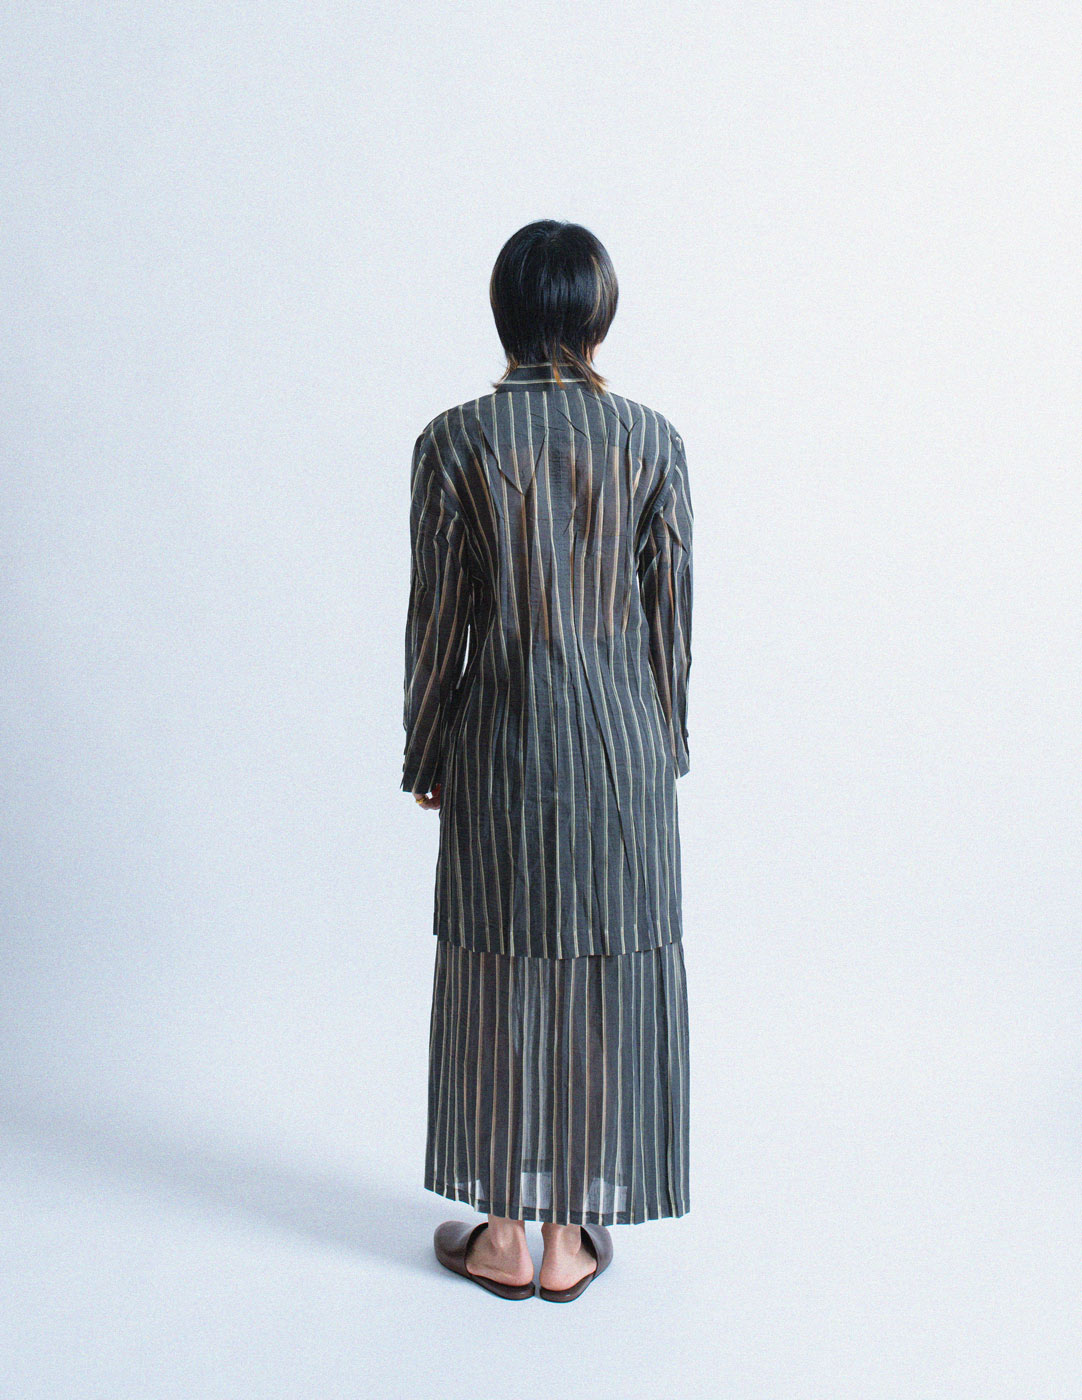 Issey Miyake vintage sheer striped shirt jacket back view